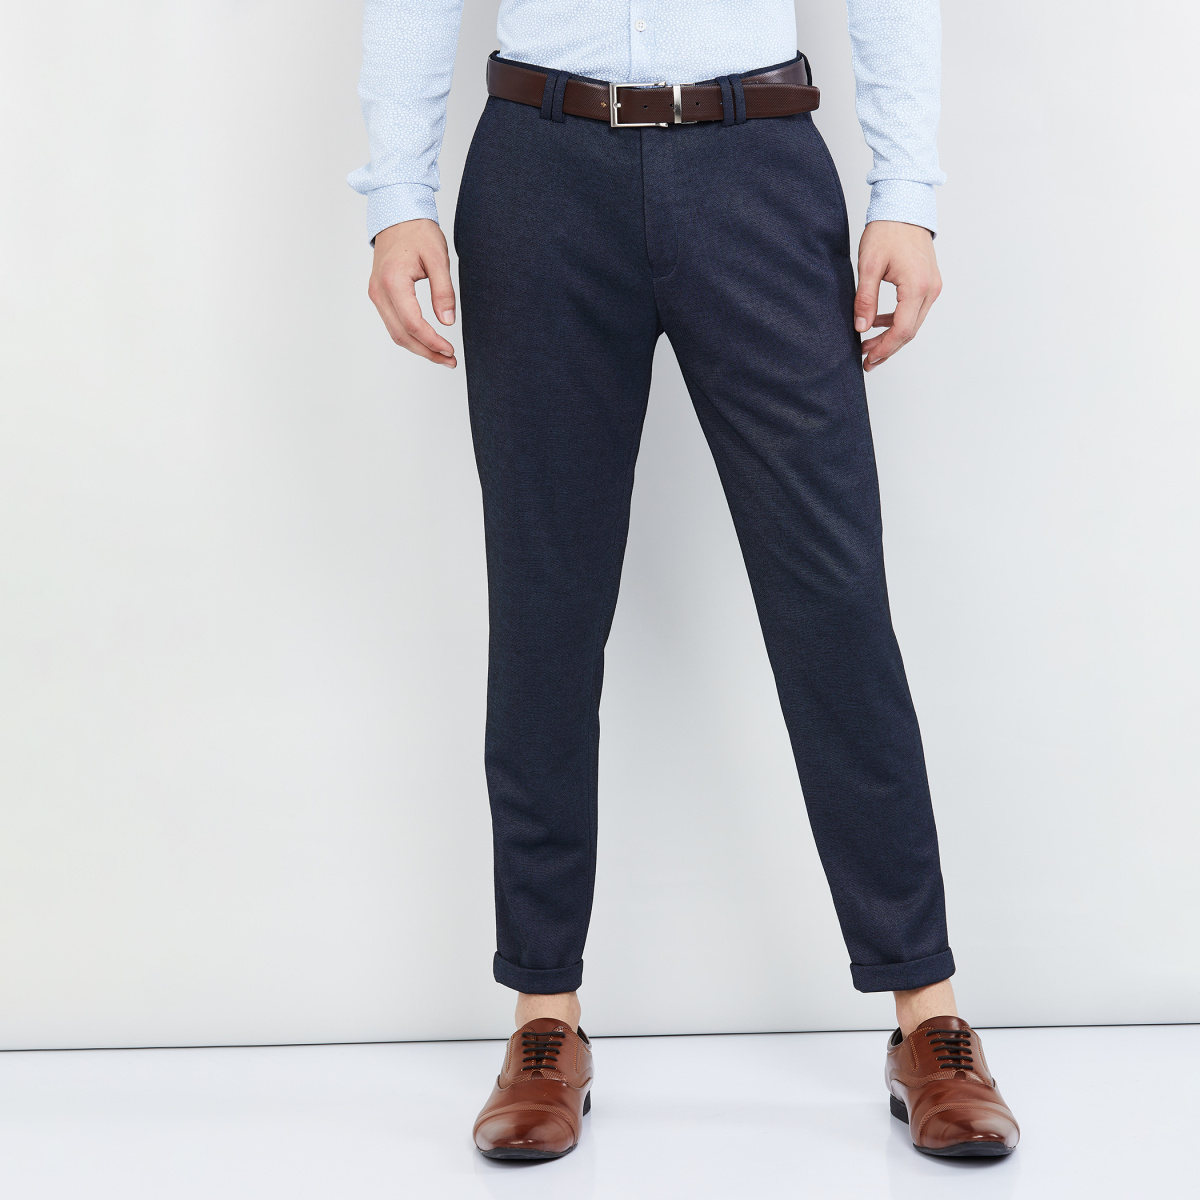 Buy Men Navy Textured Slim Fit Formal Trousers Online  709529  Peter  England